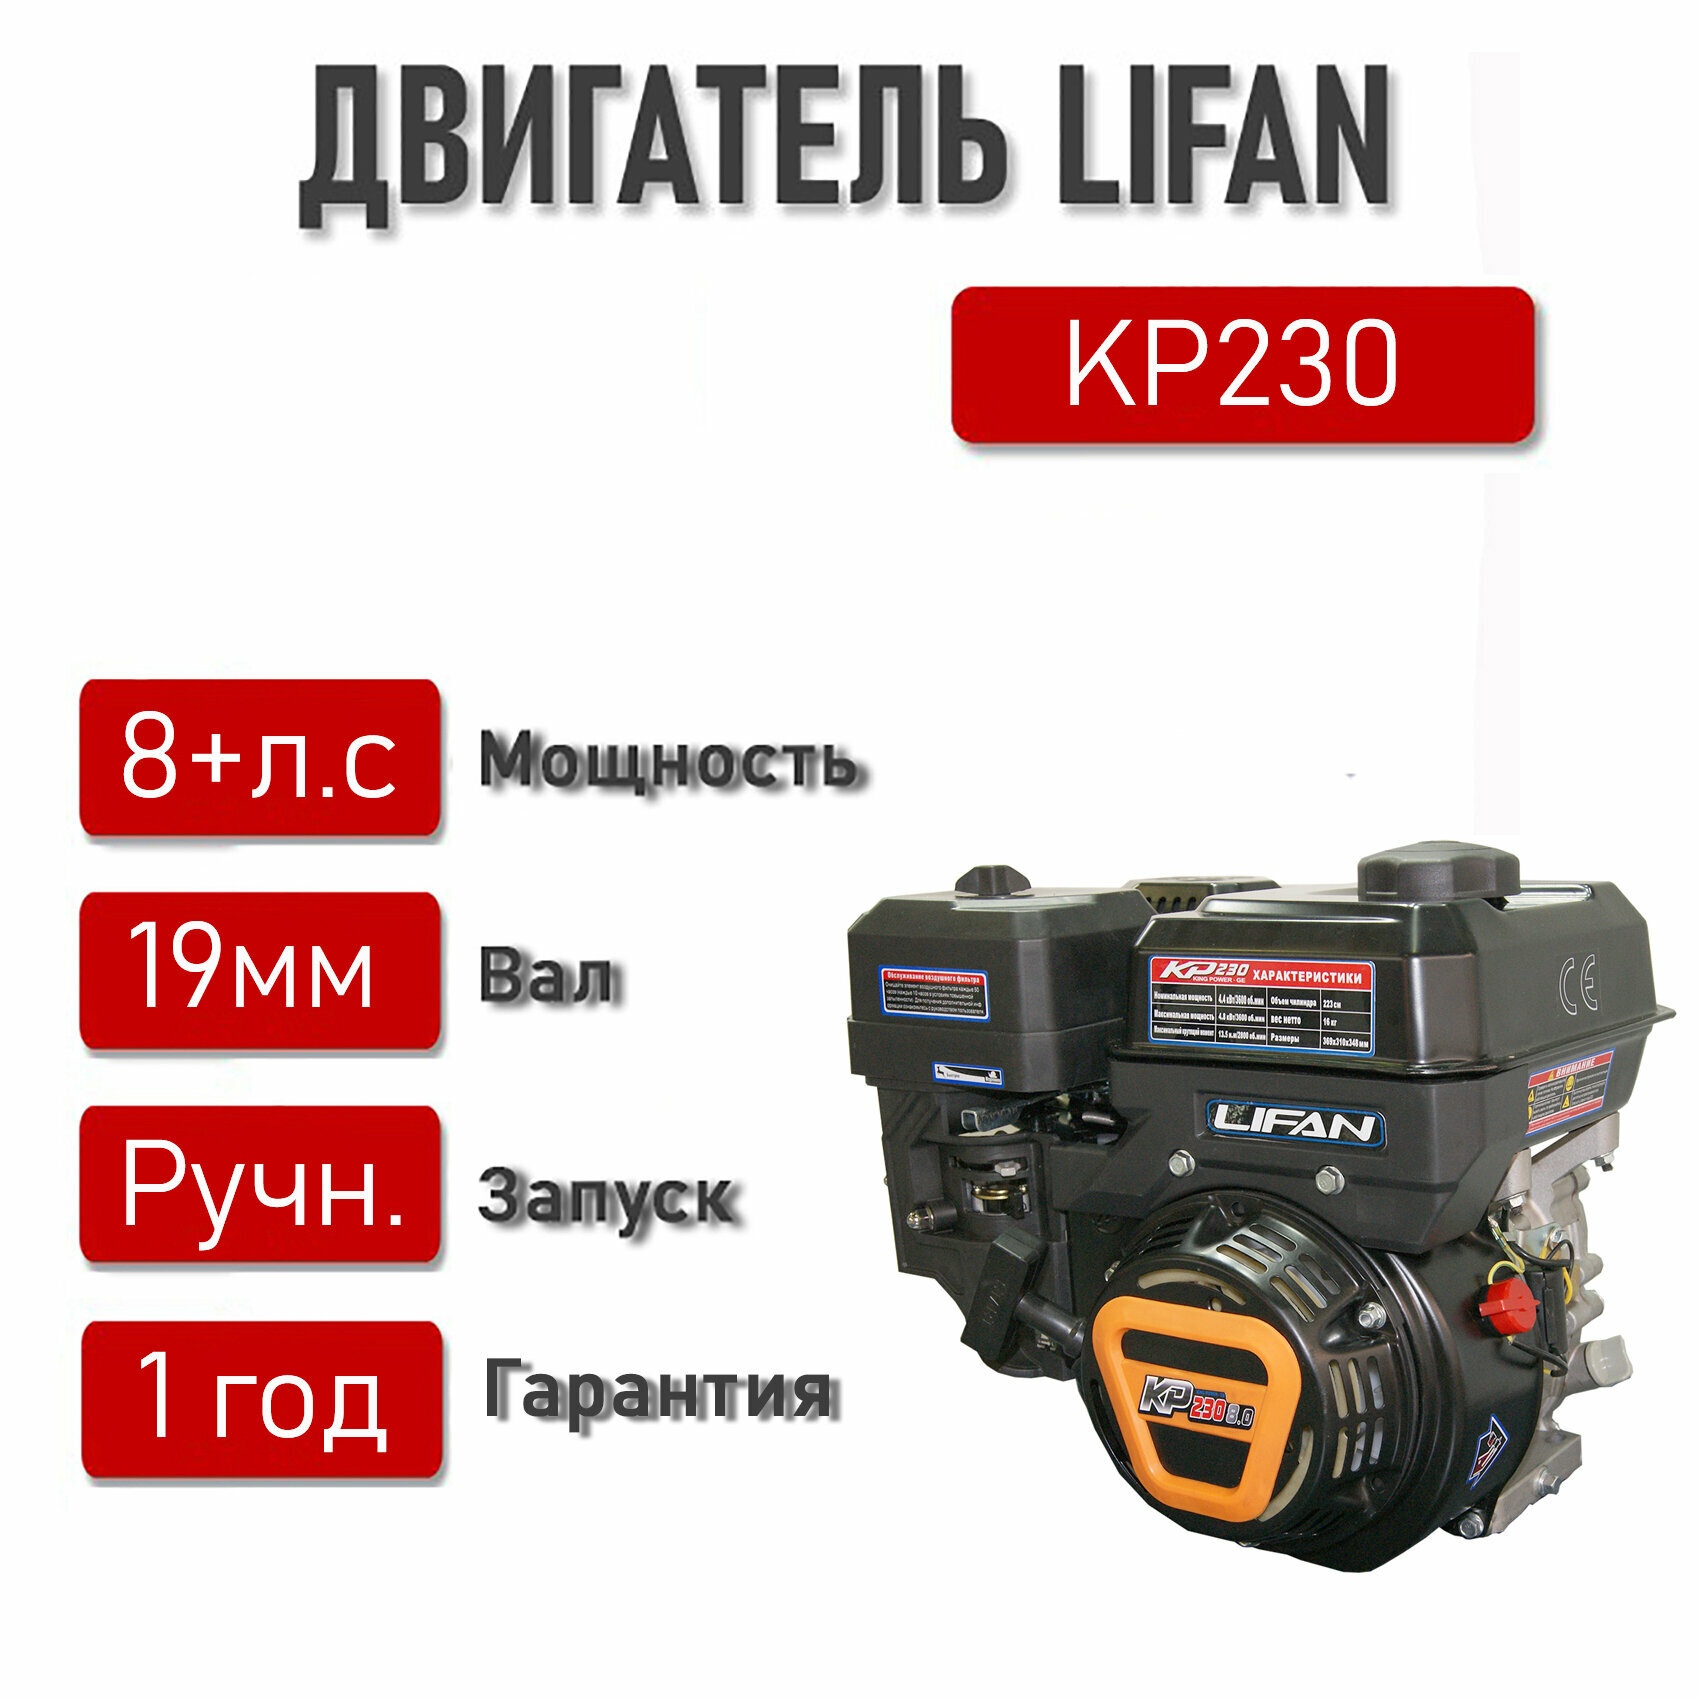 Двигатель LIFAN 8+ л. с. KP230 (вал d19)